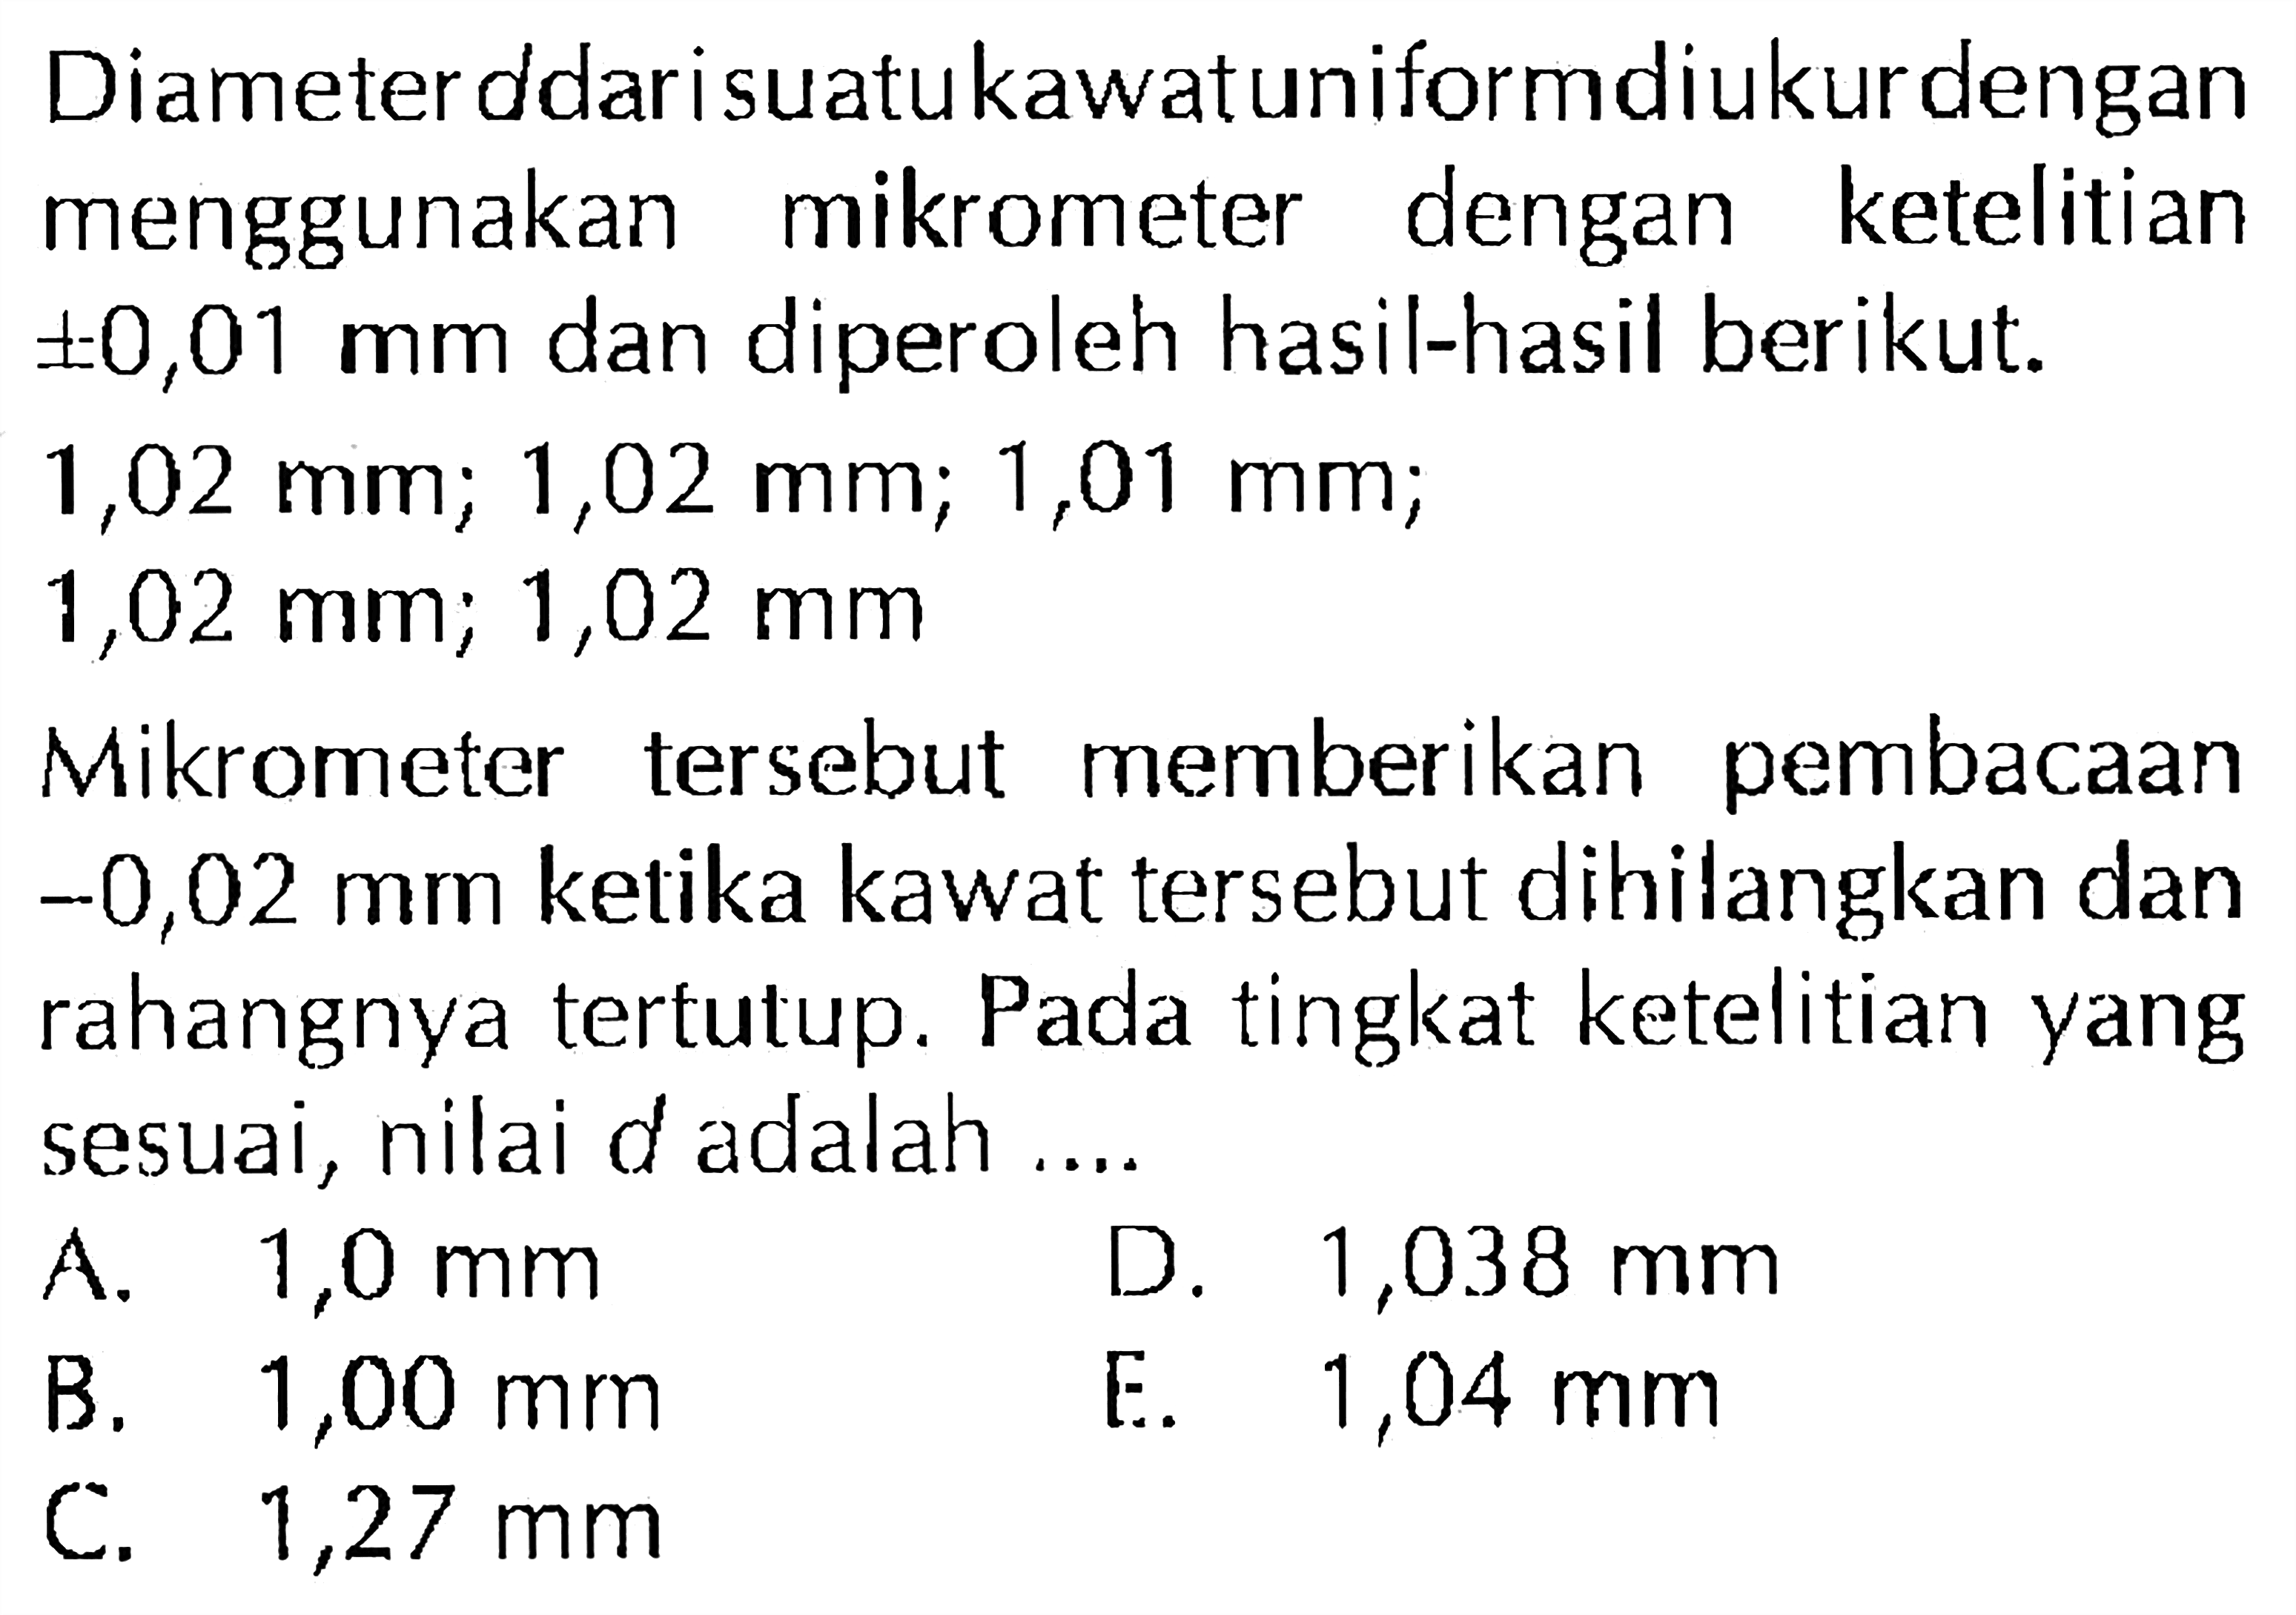 Diameter d dari suatukawatuniformdiukurdengan menggunakan mikrometer dengan ketelitian +-0,01 mm dan diperoleh hasil-hasil berikut: 1,,02 mm, 1,02 mm, 1,01mm, 1,02 mm; 1,02 mm Mikrometer tersebut memberikan pembacaan -0,02 mm ketika kawat tersebut dihilangkan dan rahangnya tertutup. Pada tingkat ketelitian yang sesuai, nilai d adalah